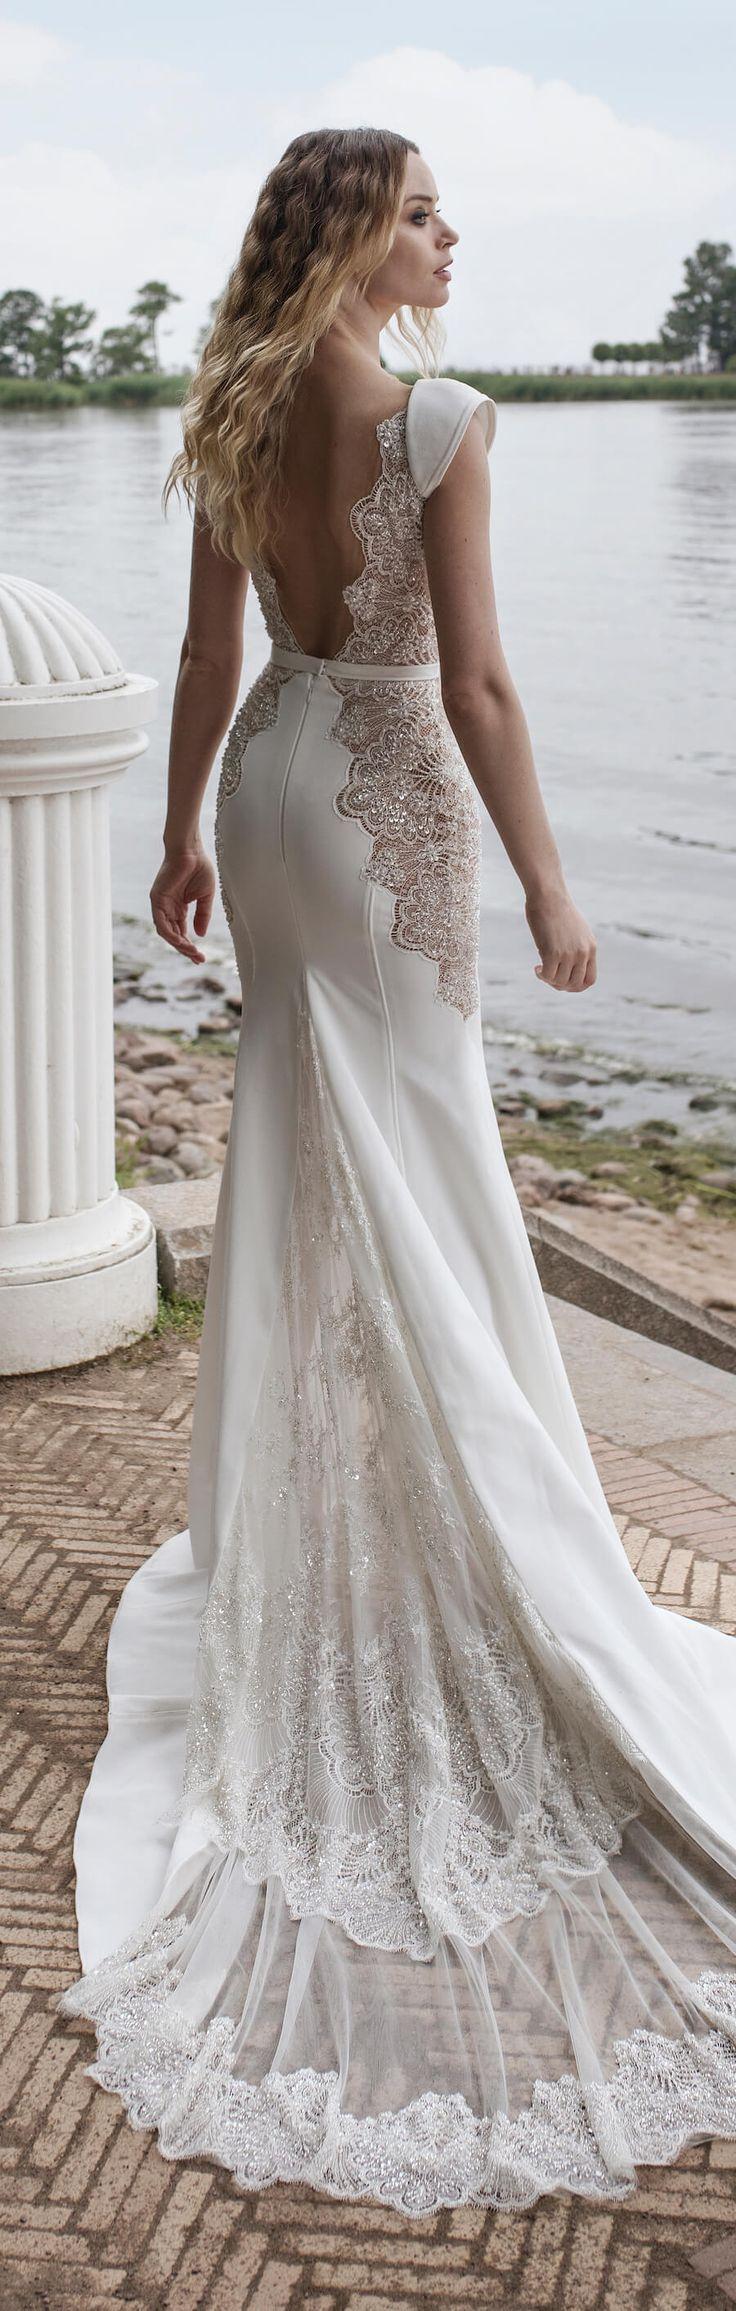 Hochzeit - Lian Rokman Wedding Dresses 2018: Stardust Bridal Collection